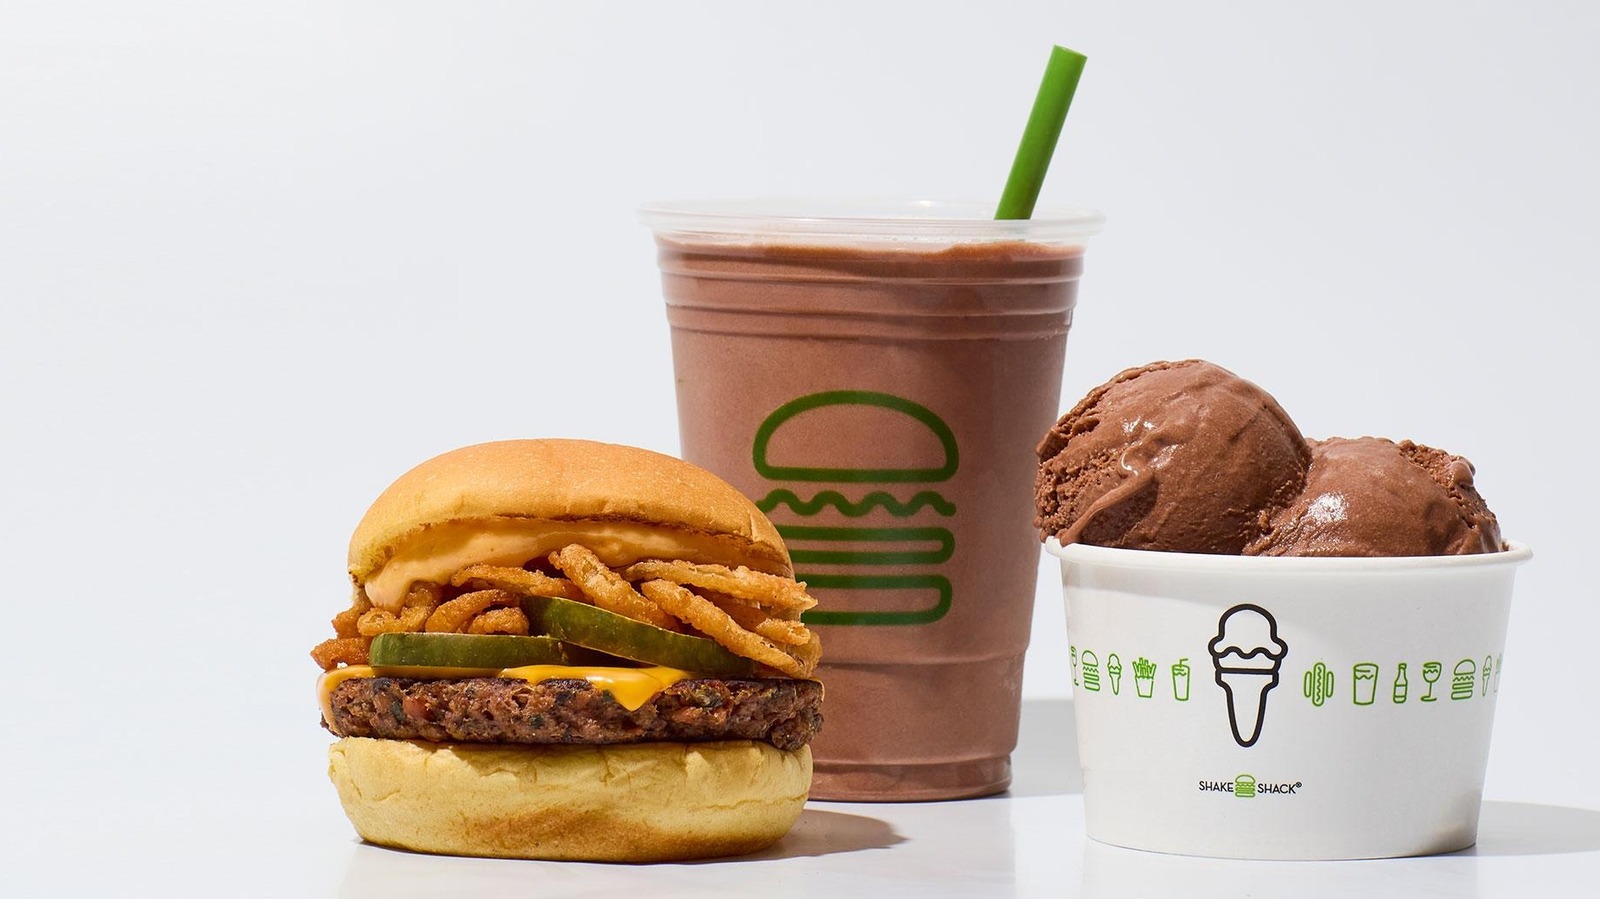 https://www.tastingtable.com/img/gallery/shake-shack-adds-a-veggie-burger-and-dairy-free-shake-to-its-menu/l-intro-1683051492.jpg